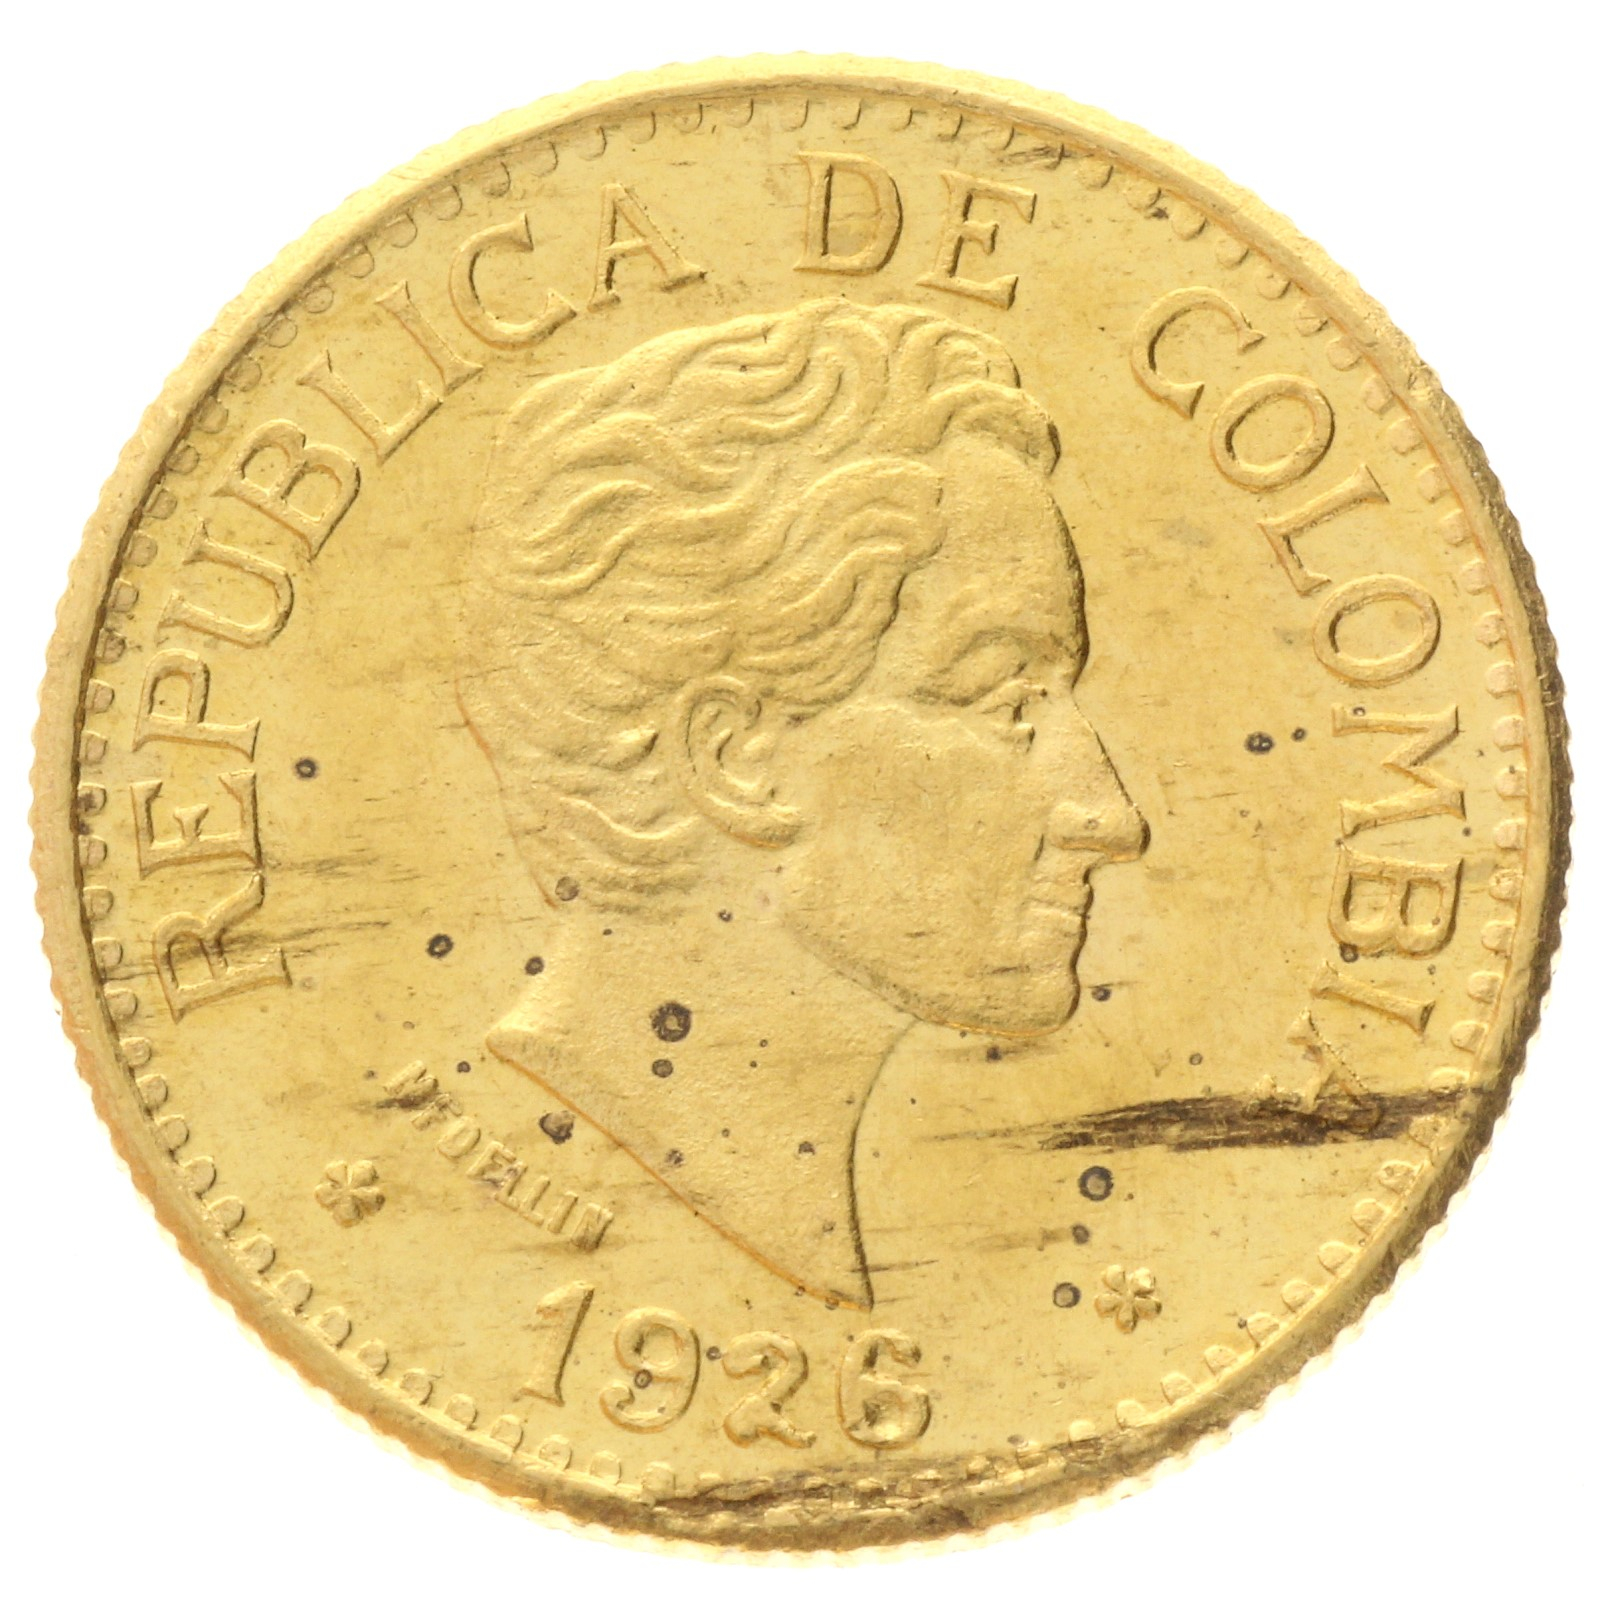 Colombia - 5 pesos - 1926